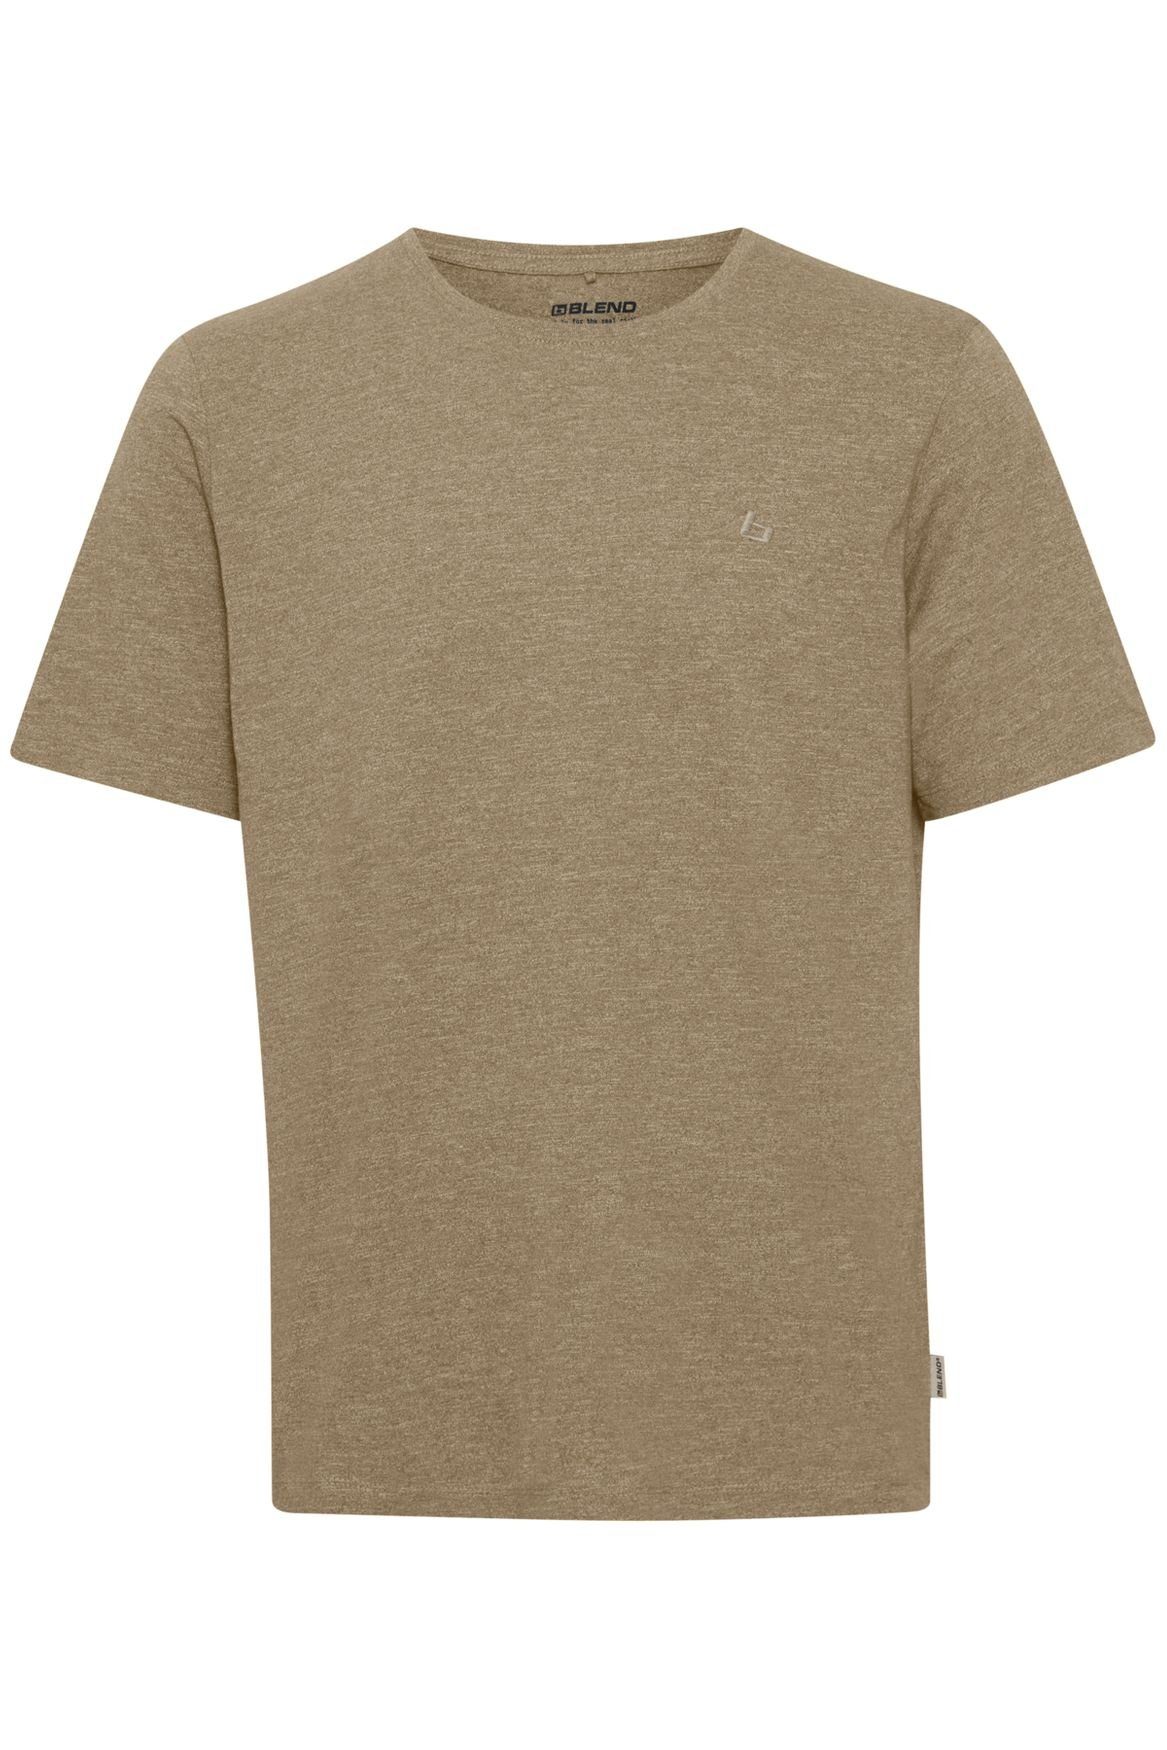 5030 Beige T-Shirt BHWilton T-Shirt Kurzarm Blend Rundhals Shirt in Stretch